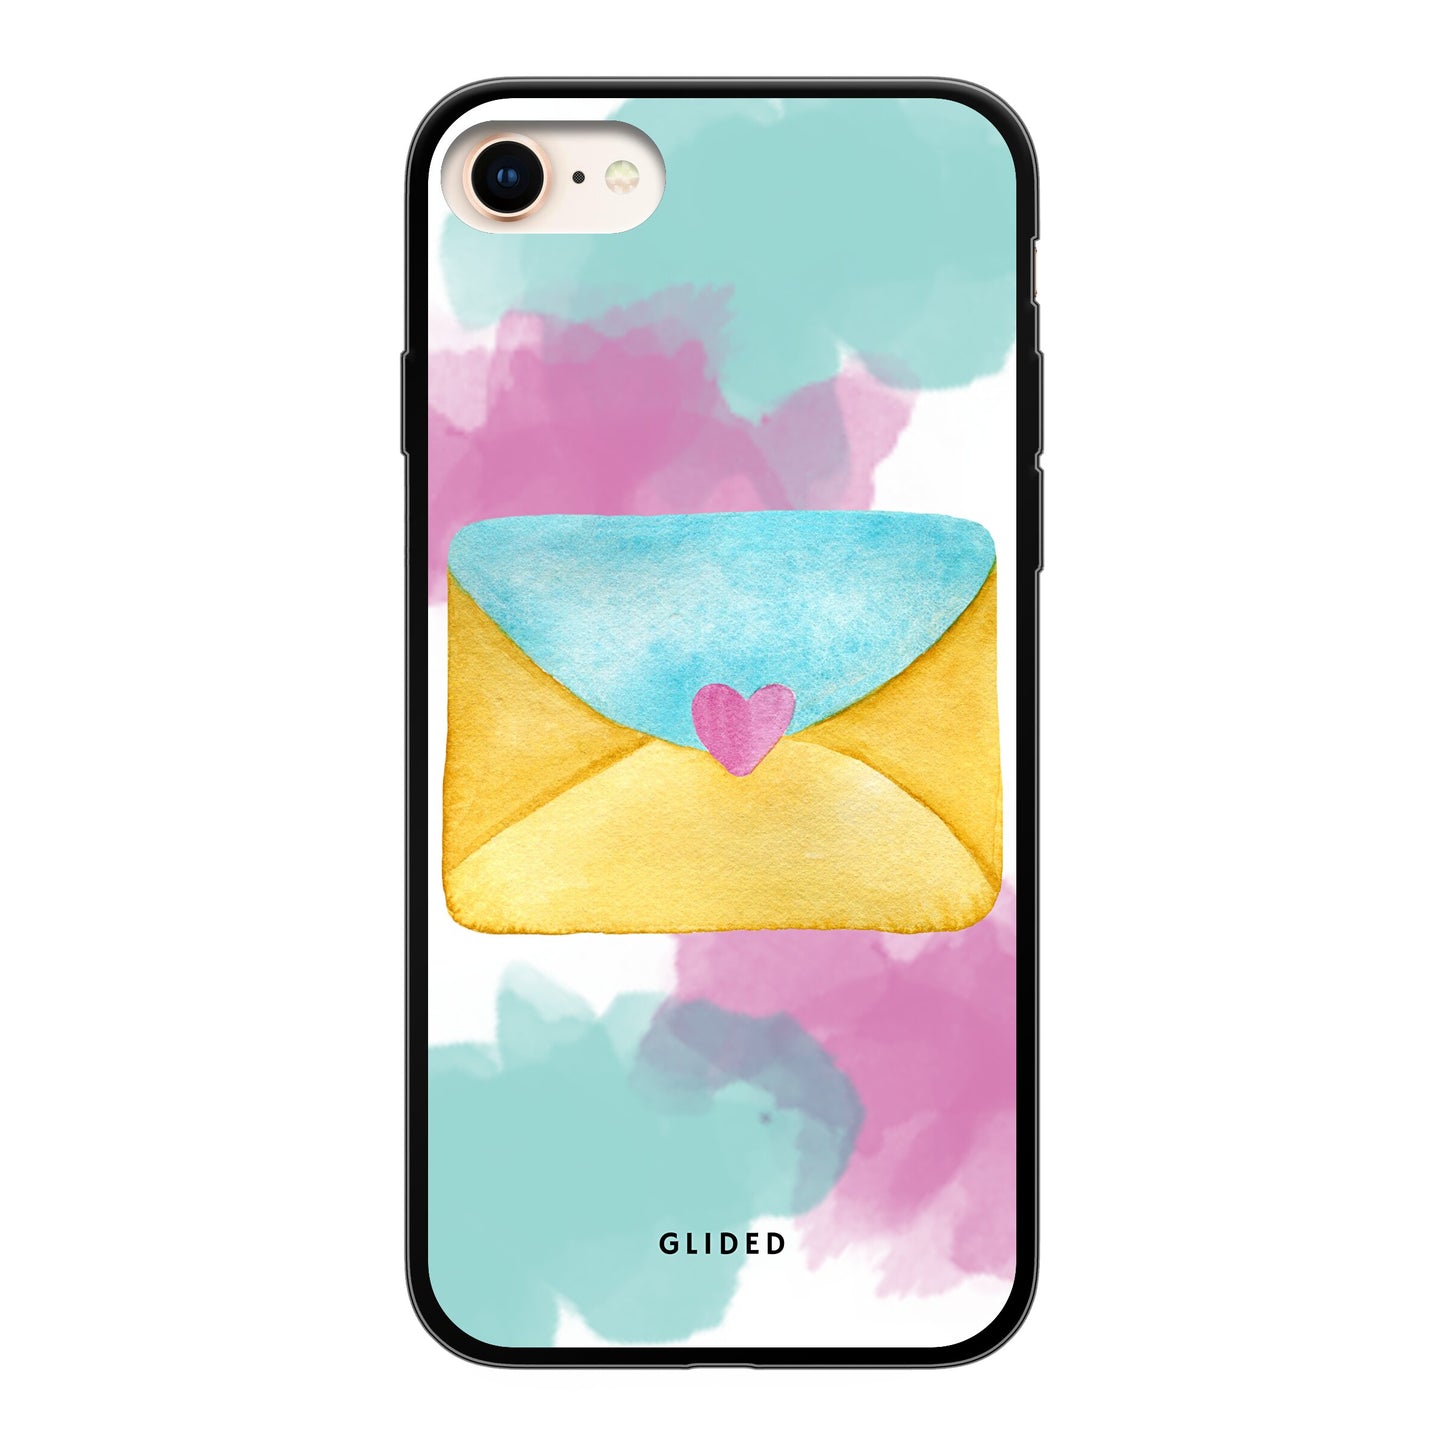 Envelope - iPhone 7 - Soft case